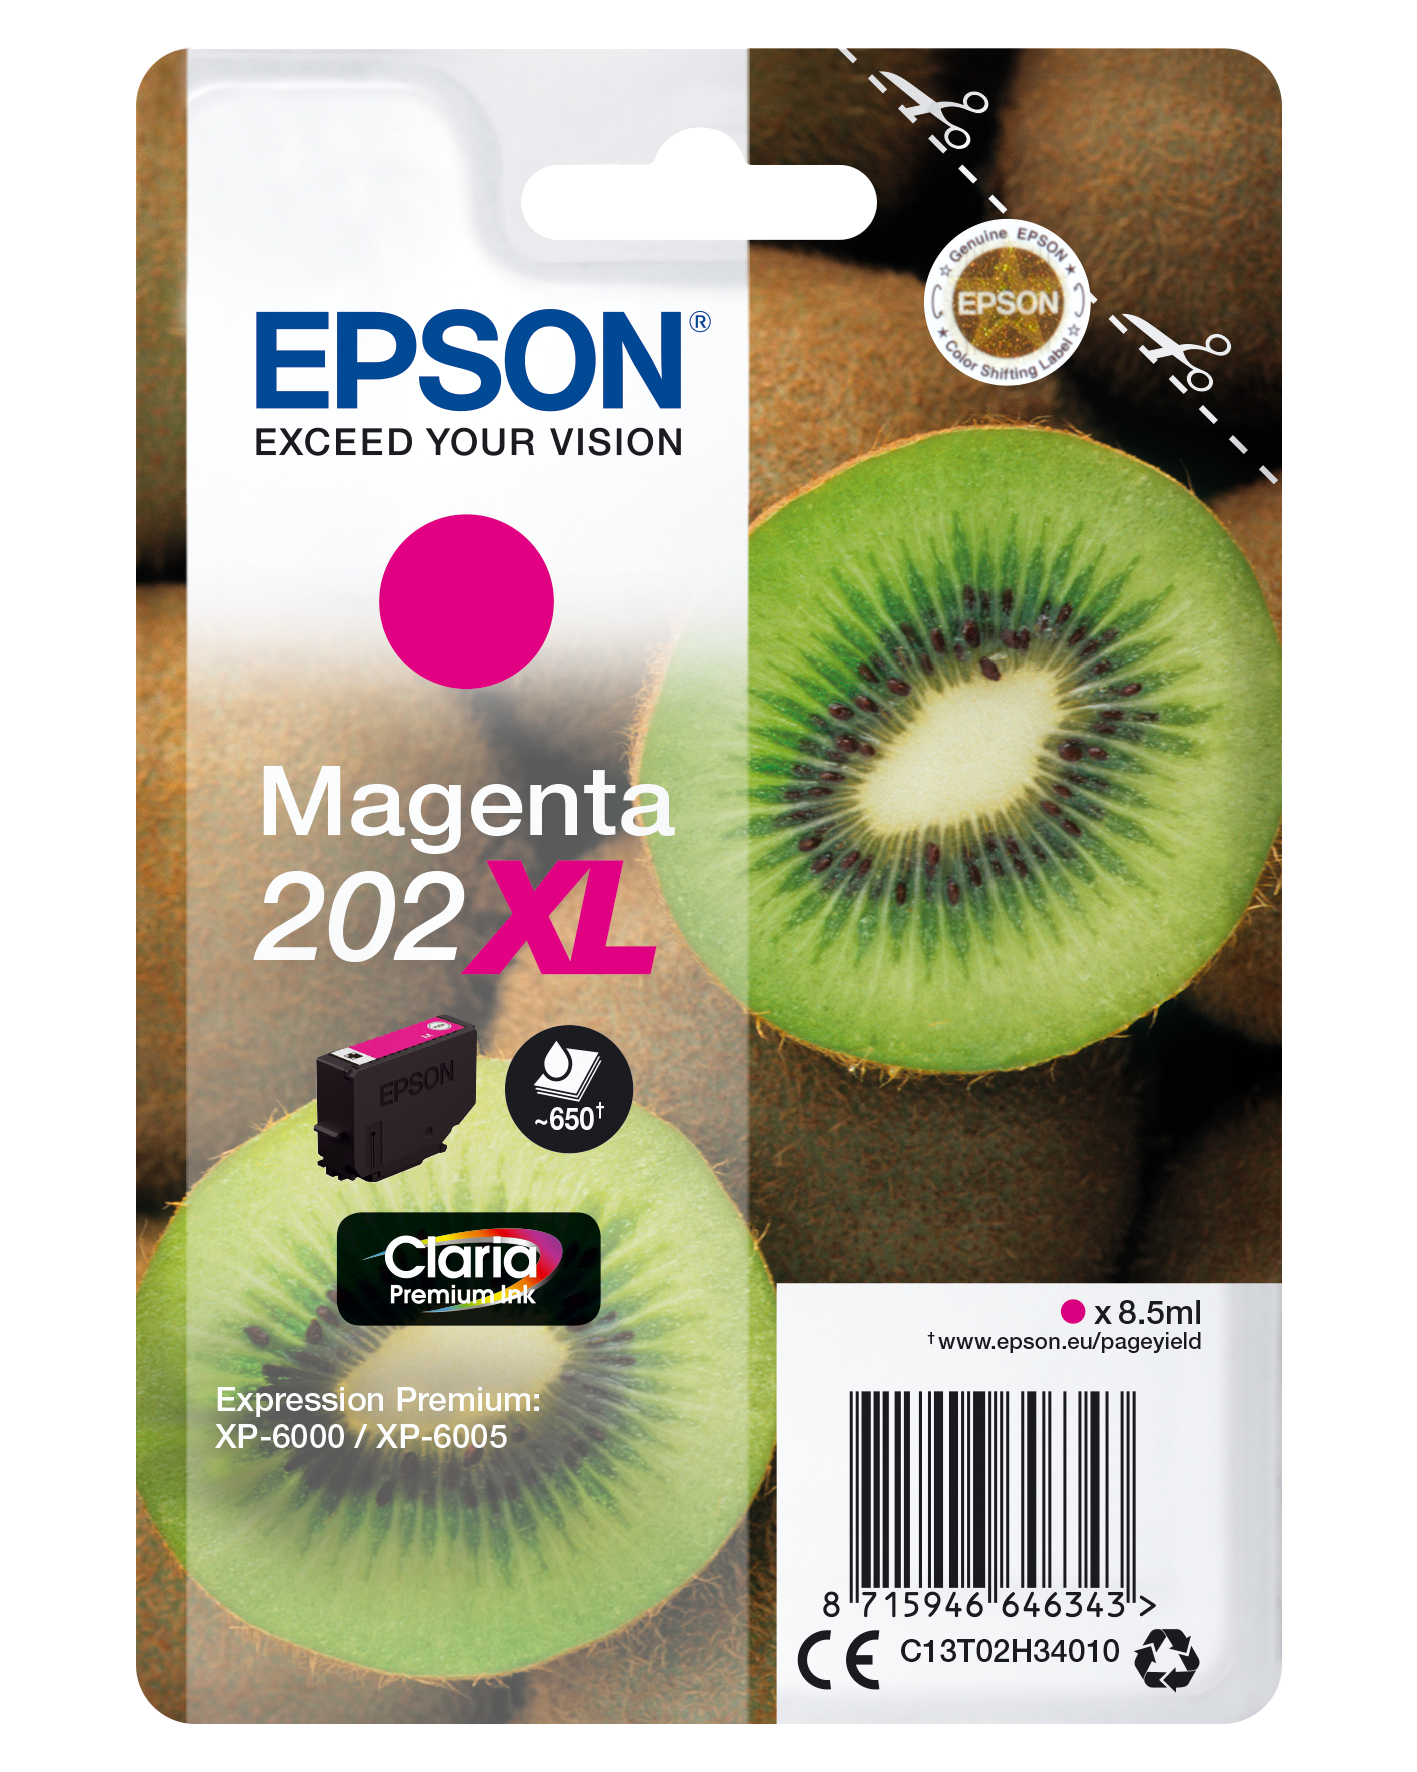 Epson Kiwi Singlepack Magenta 202XL Claria Premium Ink single pack / magenta